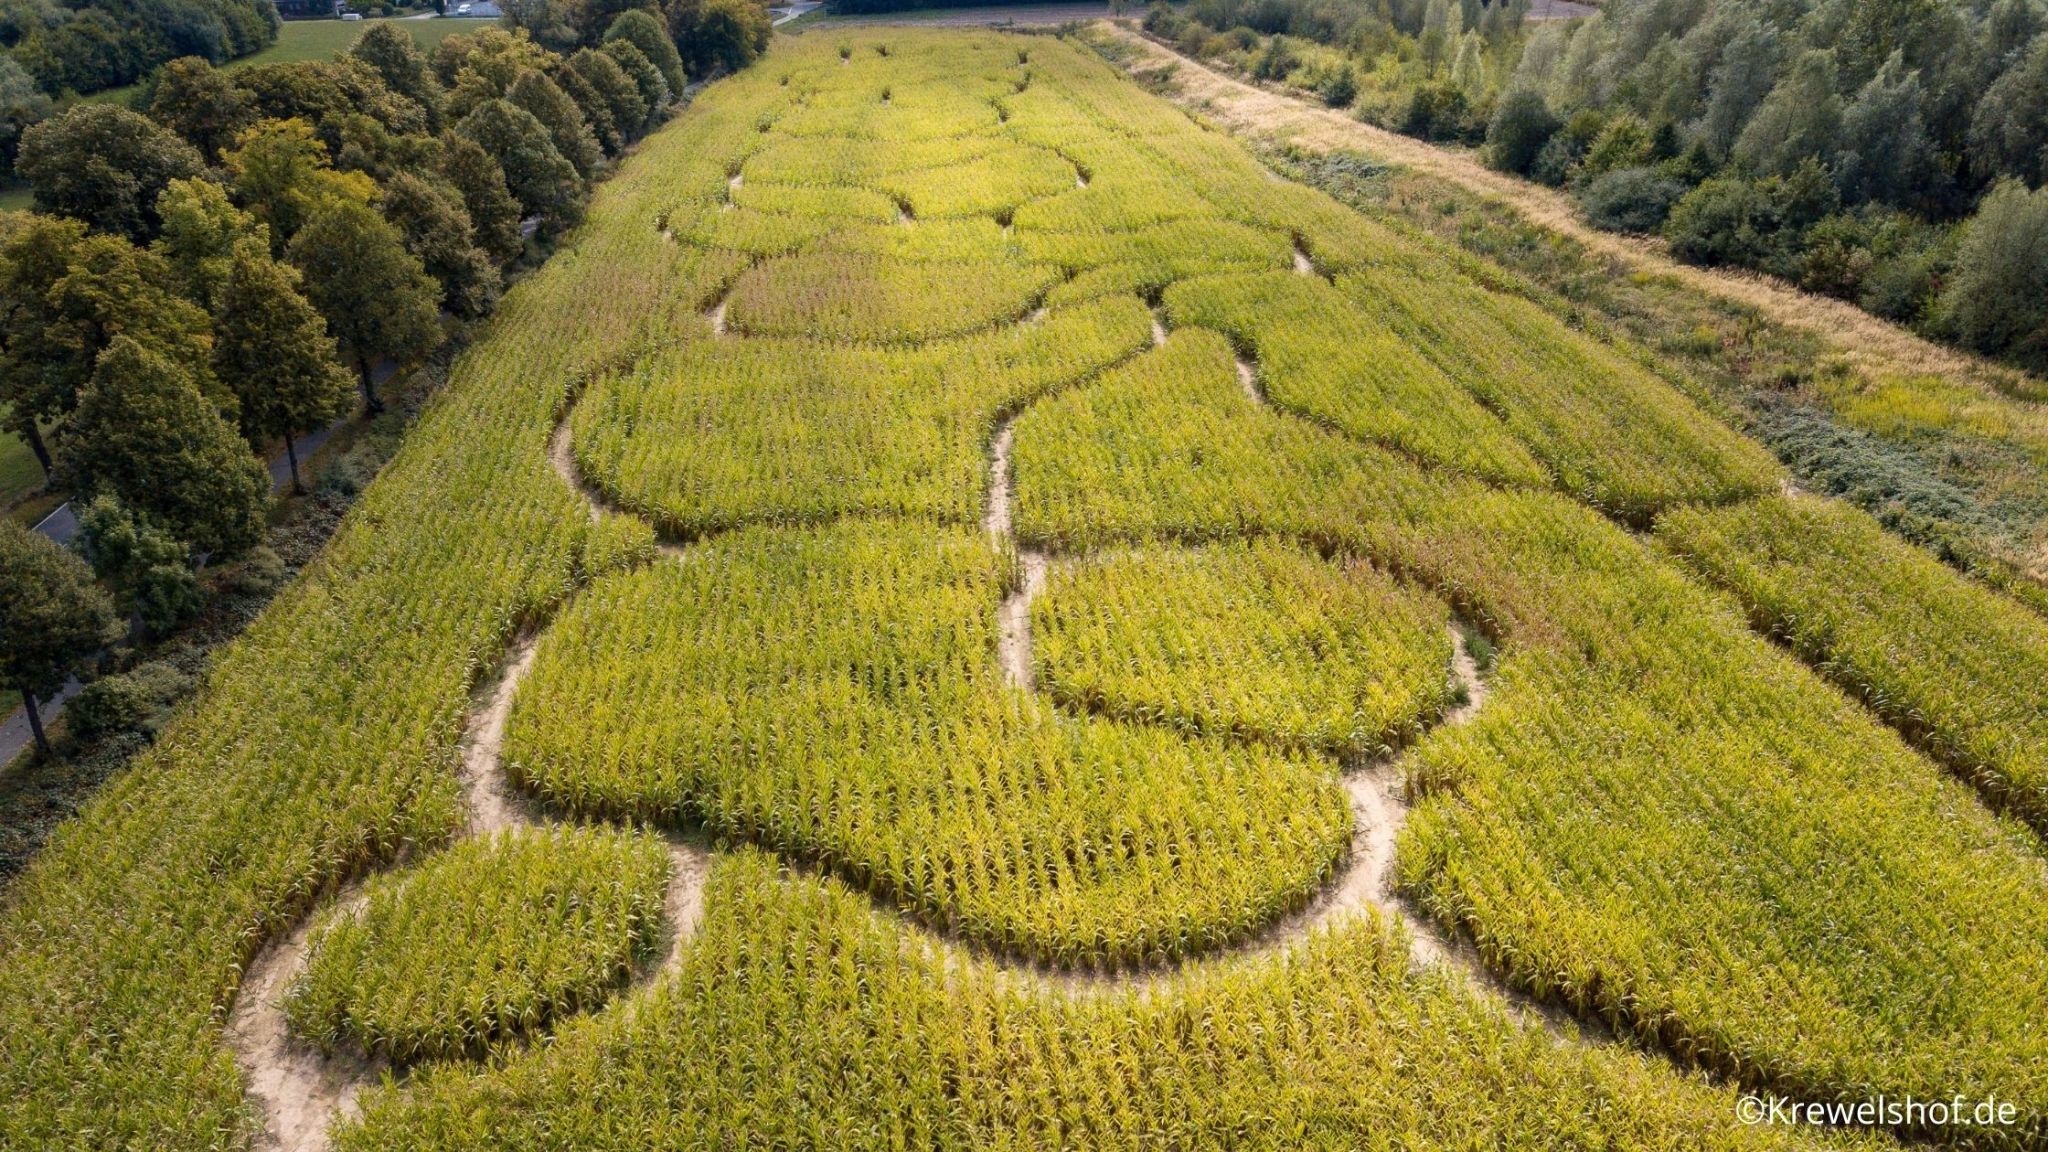 Maislabyrinth
© Krewelshof